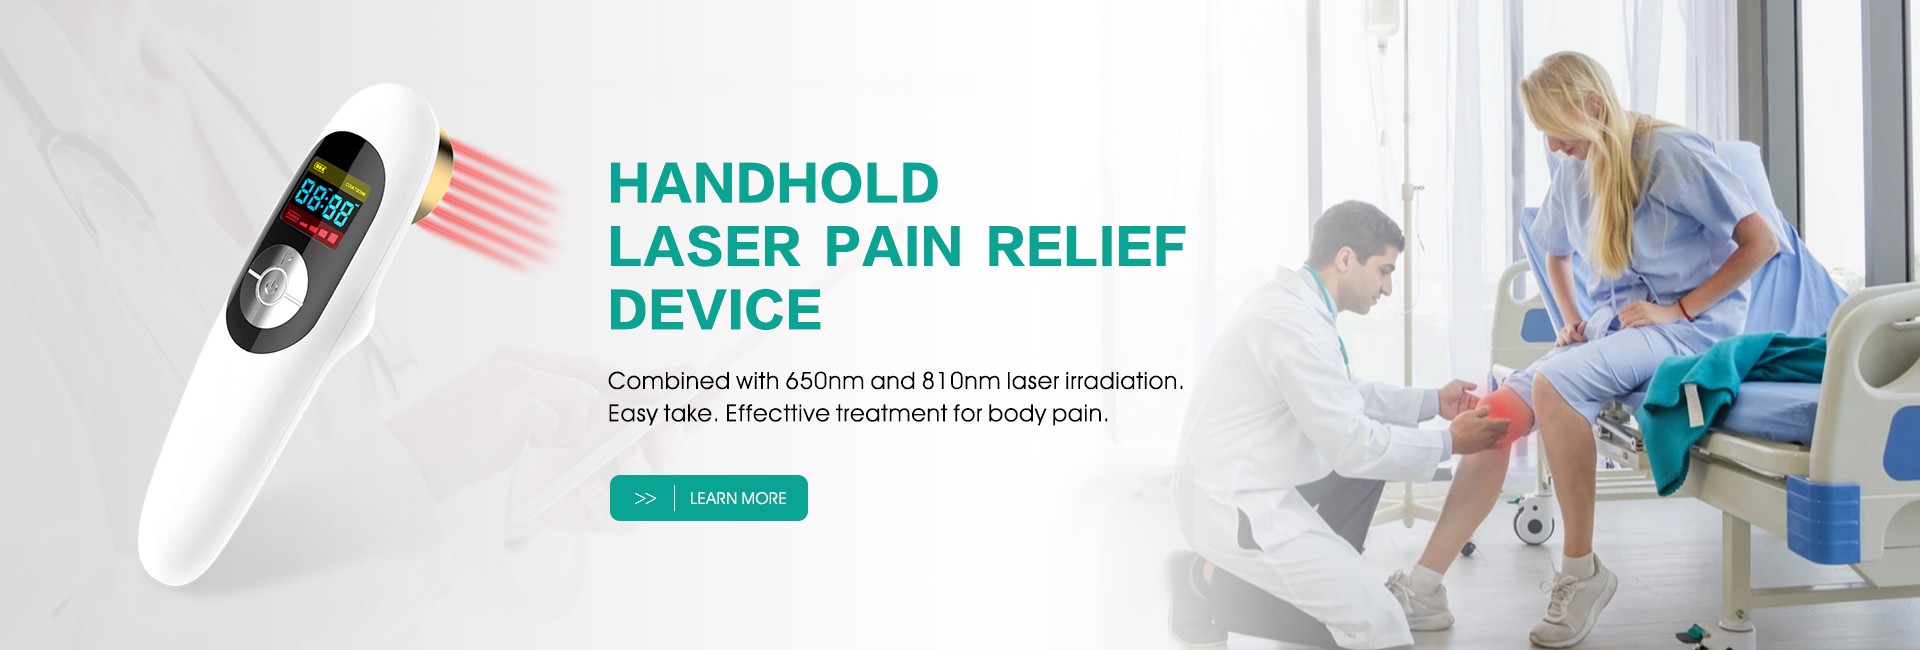 Handheld Laser Pain Relief Device